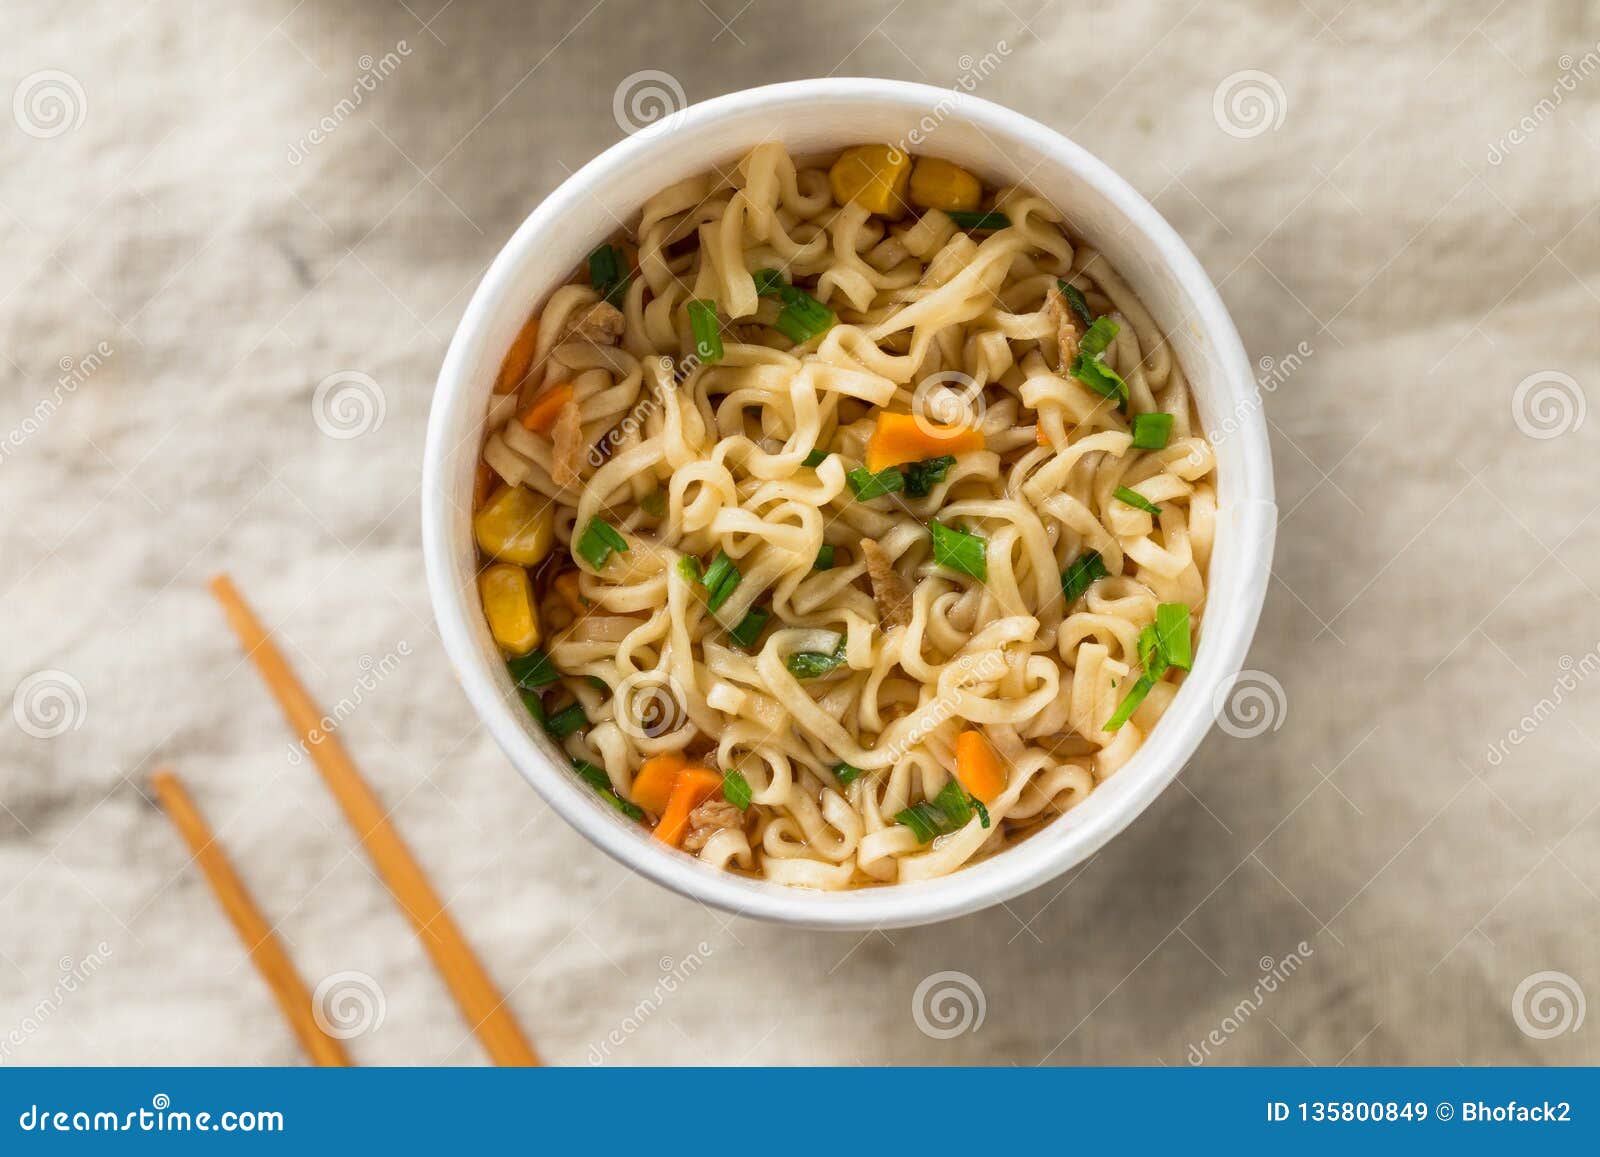 instant ramen noodles in a cup